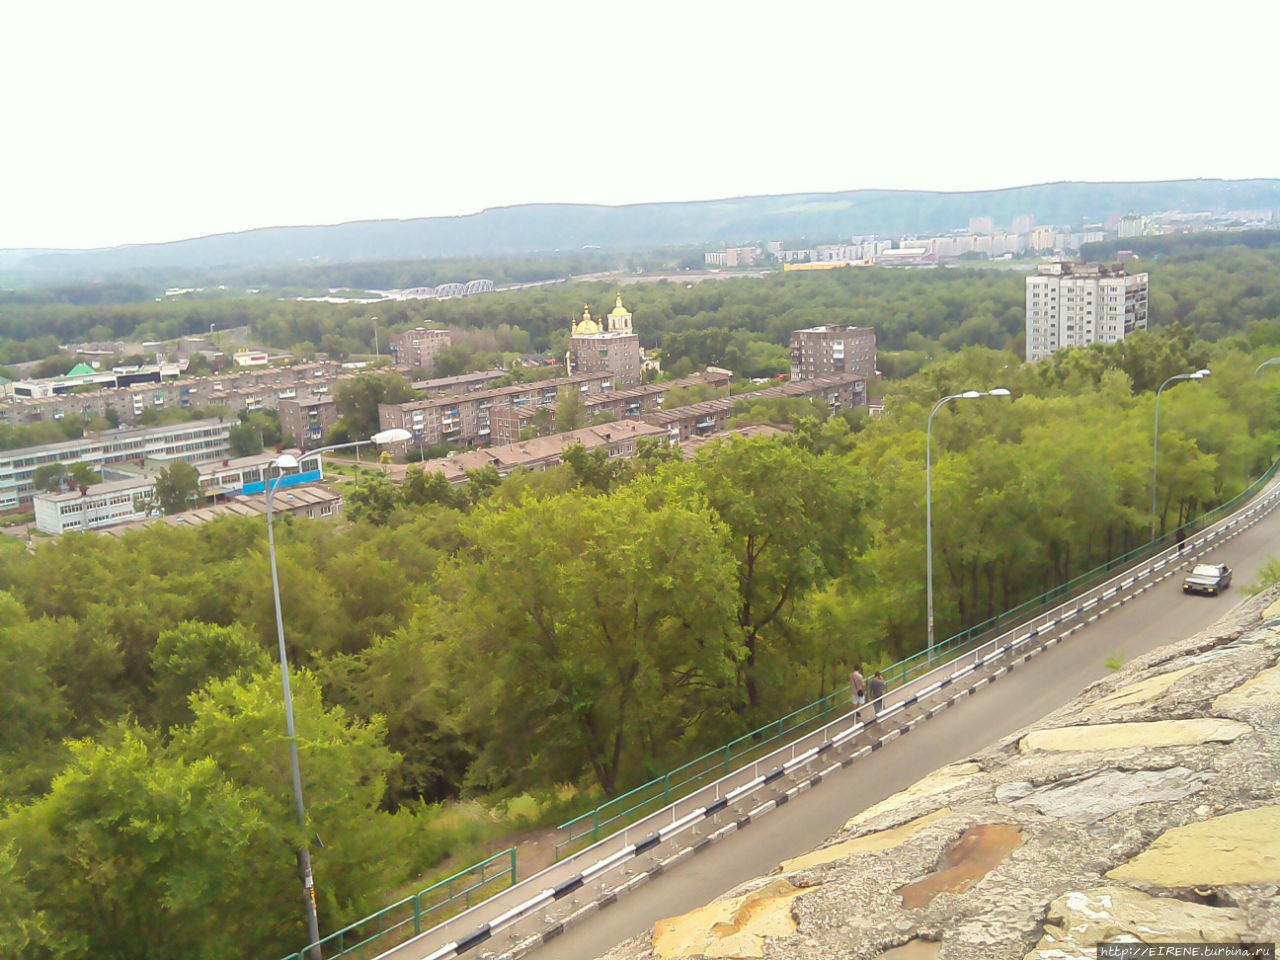 Вид на город со стен крепости. Новокузнецк, Россия